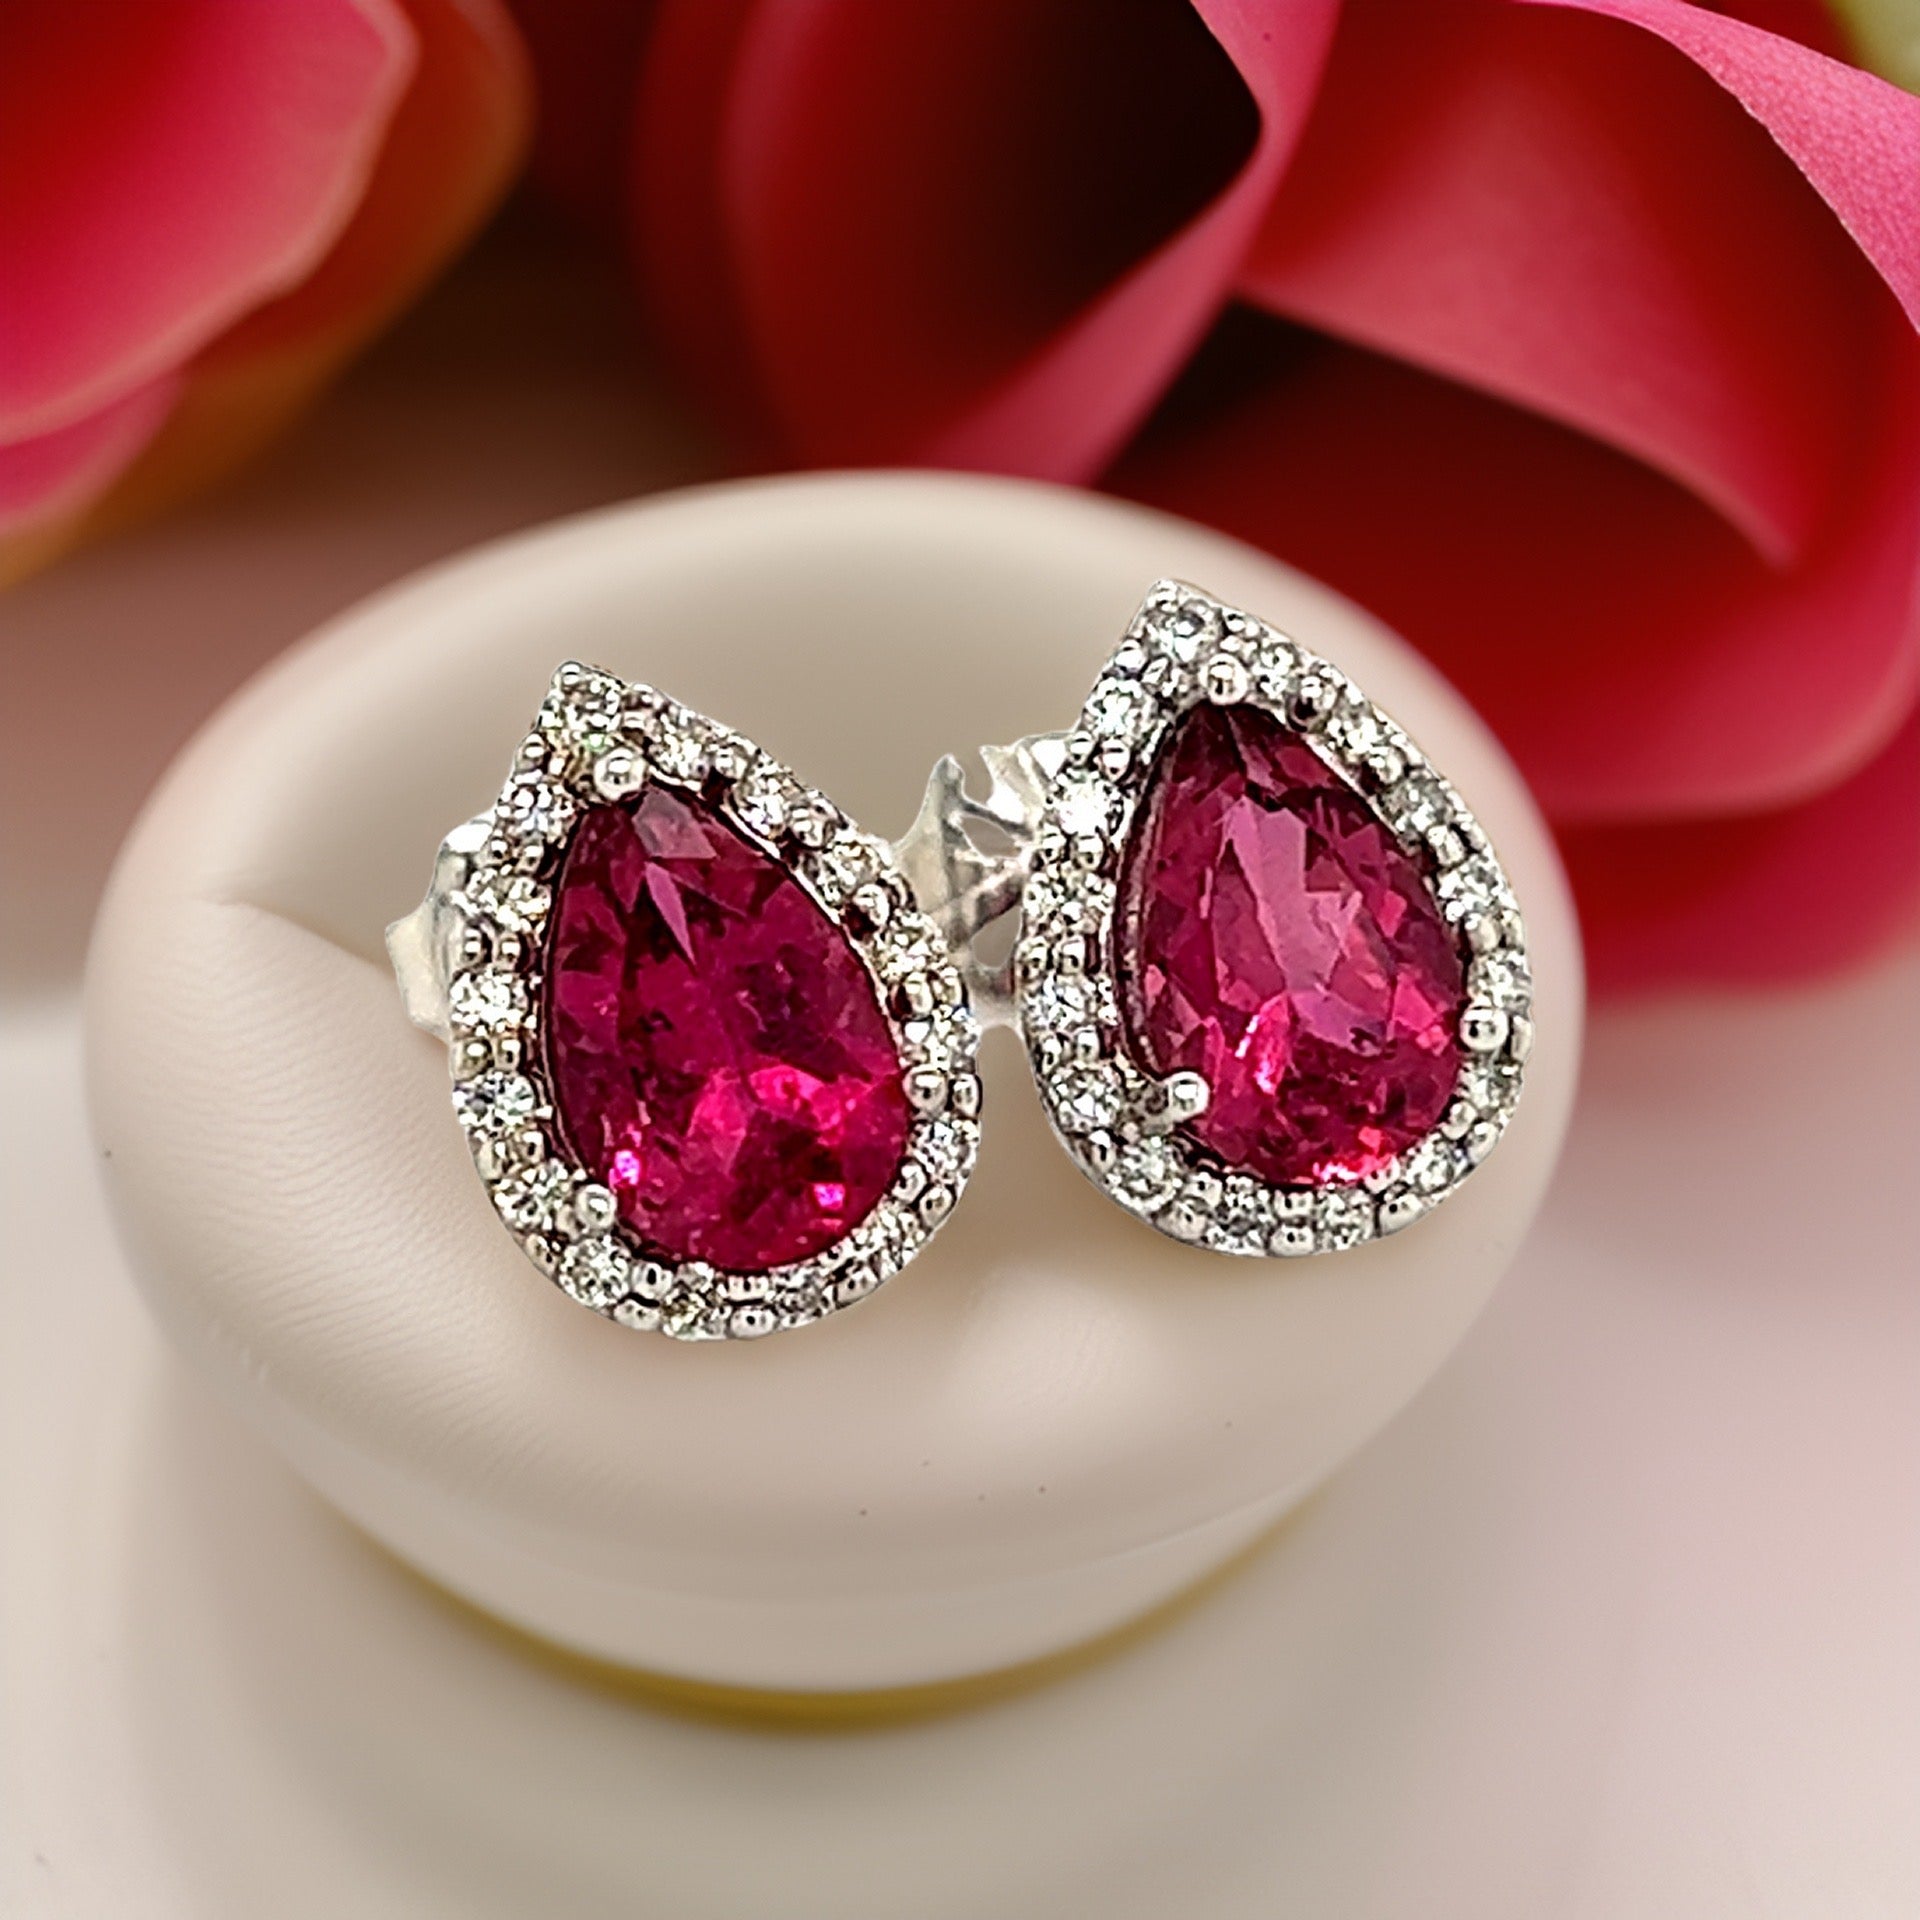 Natural Pink Tourmaline Diamond Stud Earrings 14k W Gold 2.02 TCW Certified $3,950 211890 - Certified Fine Jewelry